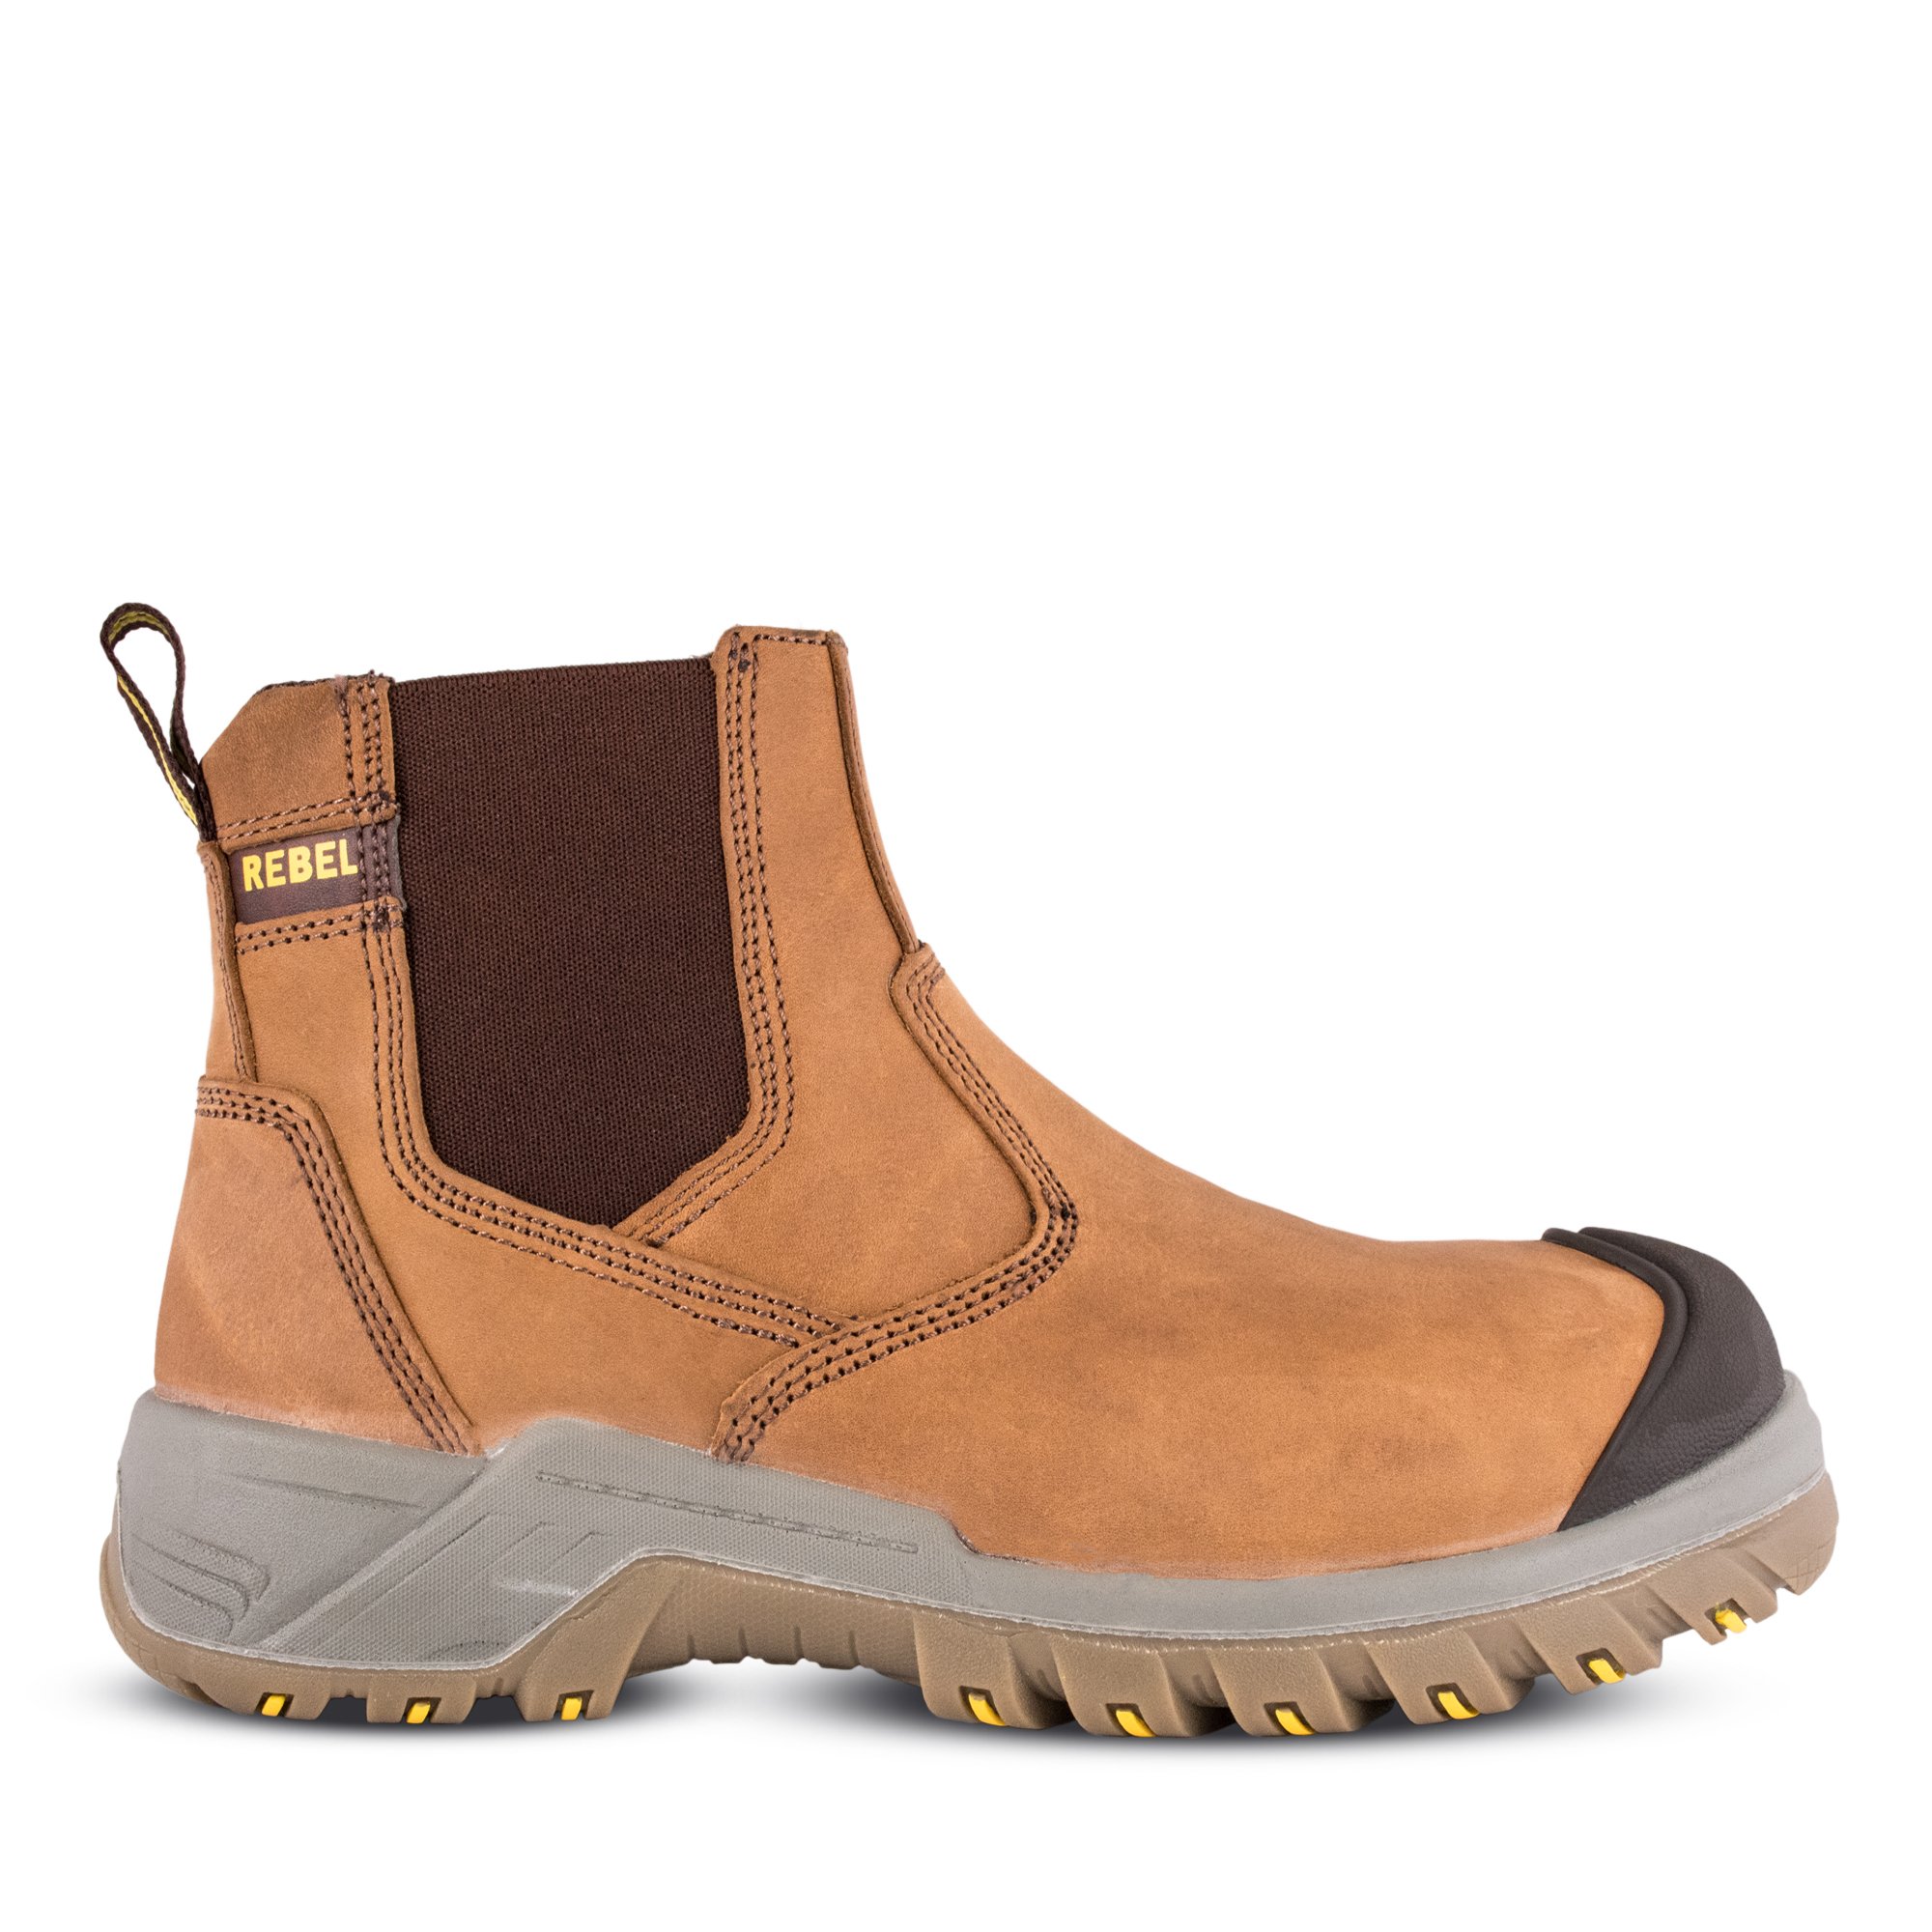 steel toe cap boots with memory foam